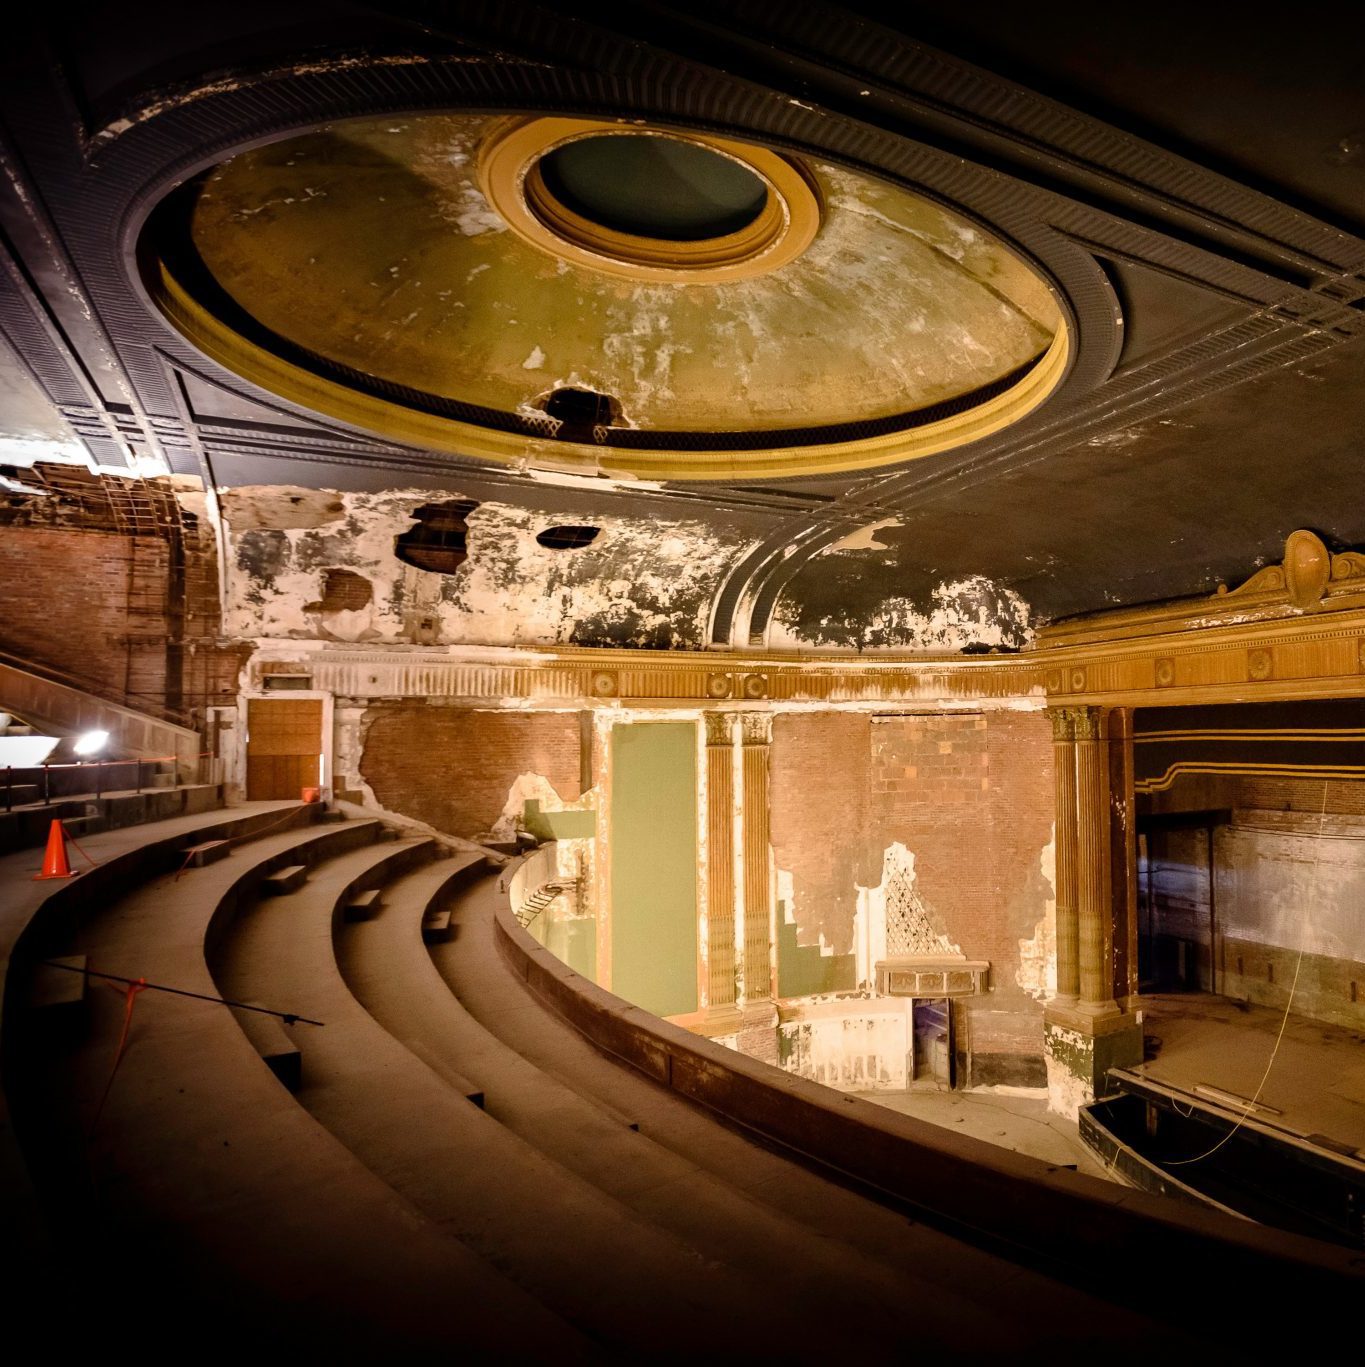 Goodwill Theatre pre-renovations